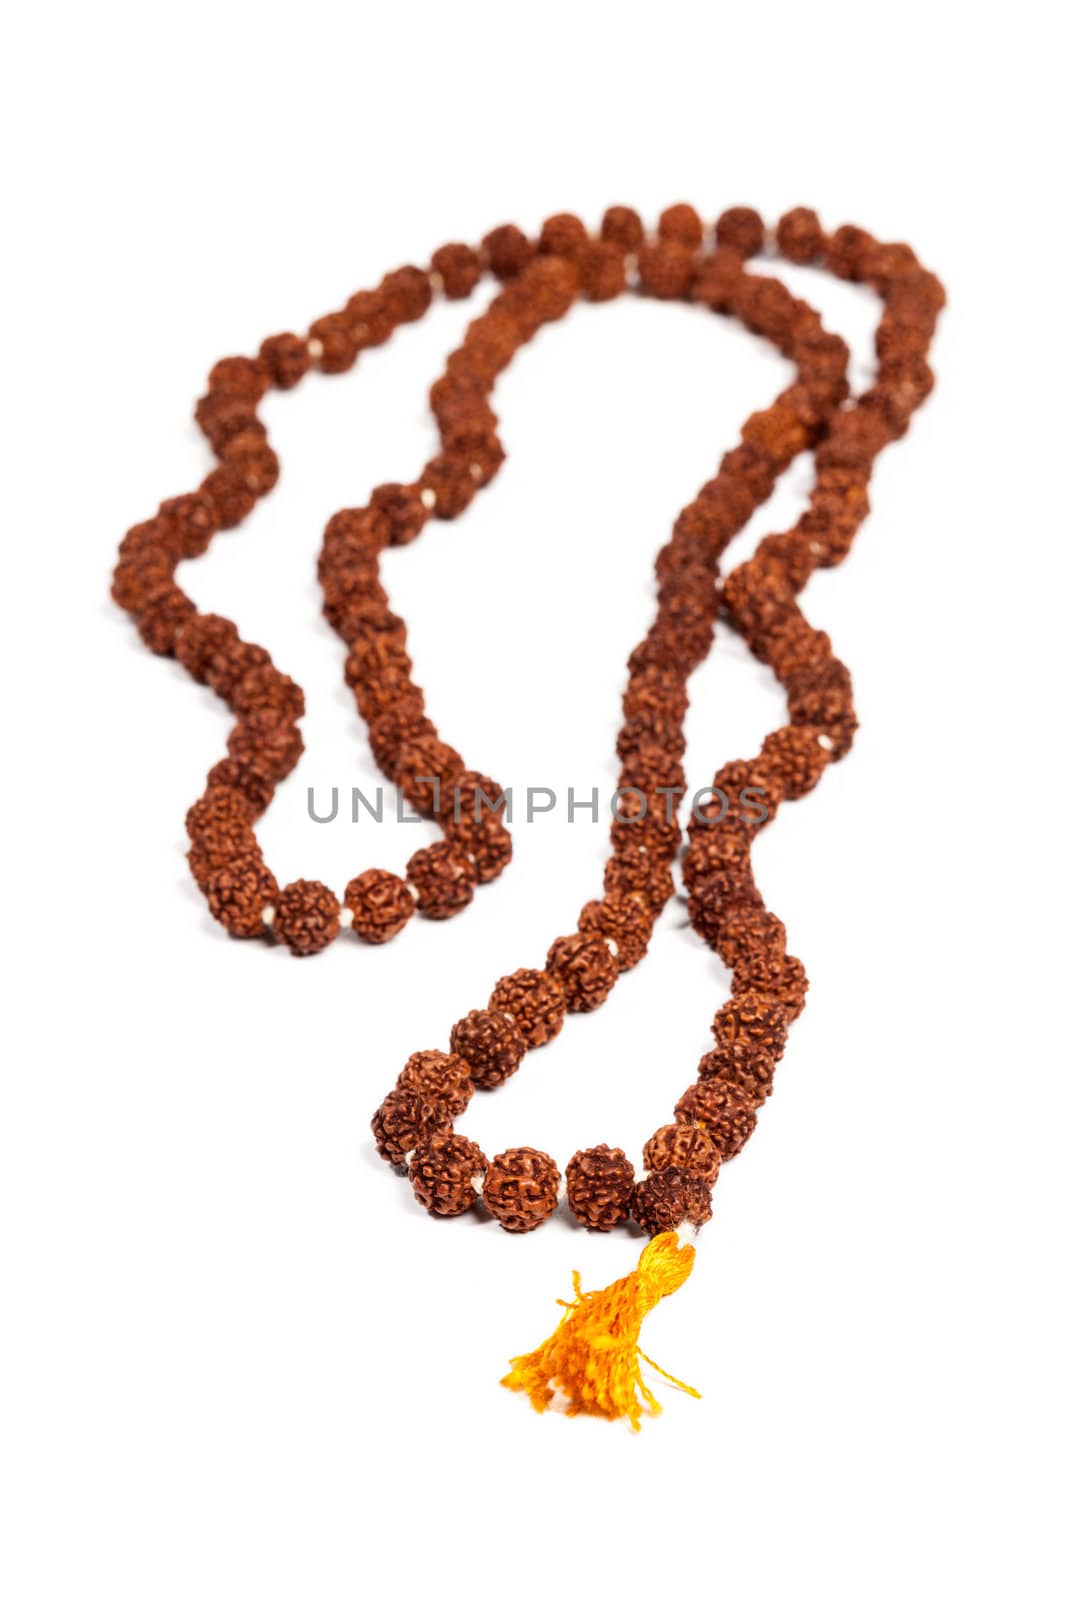 Buddhist or Hinduist Japa mala (prayer beads) made of rudraksha isolated